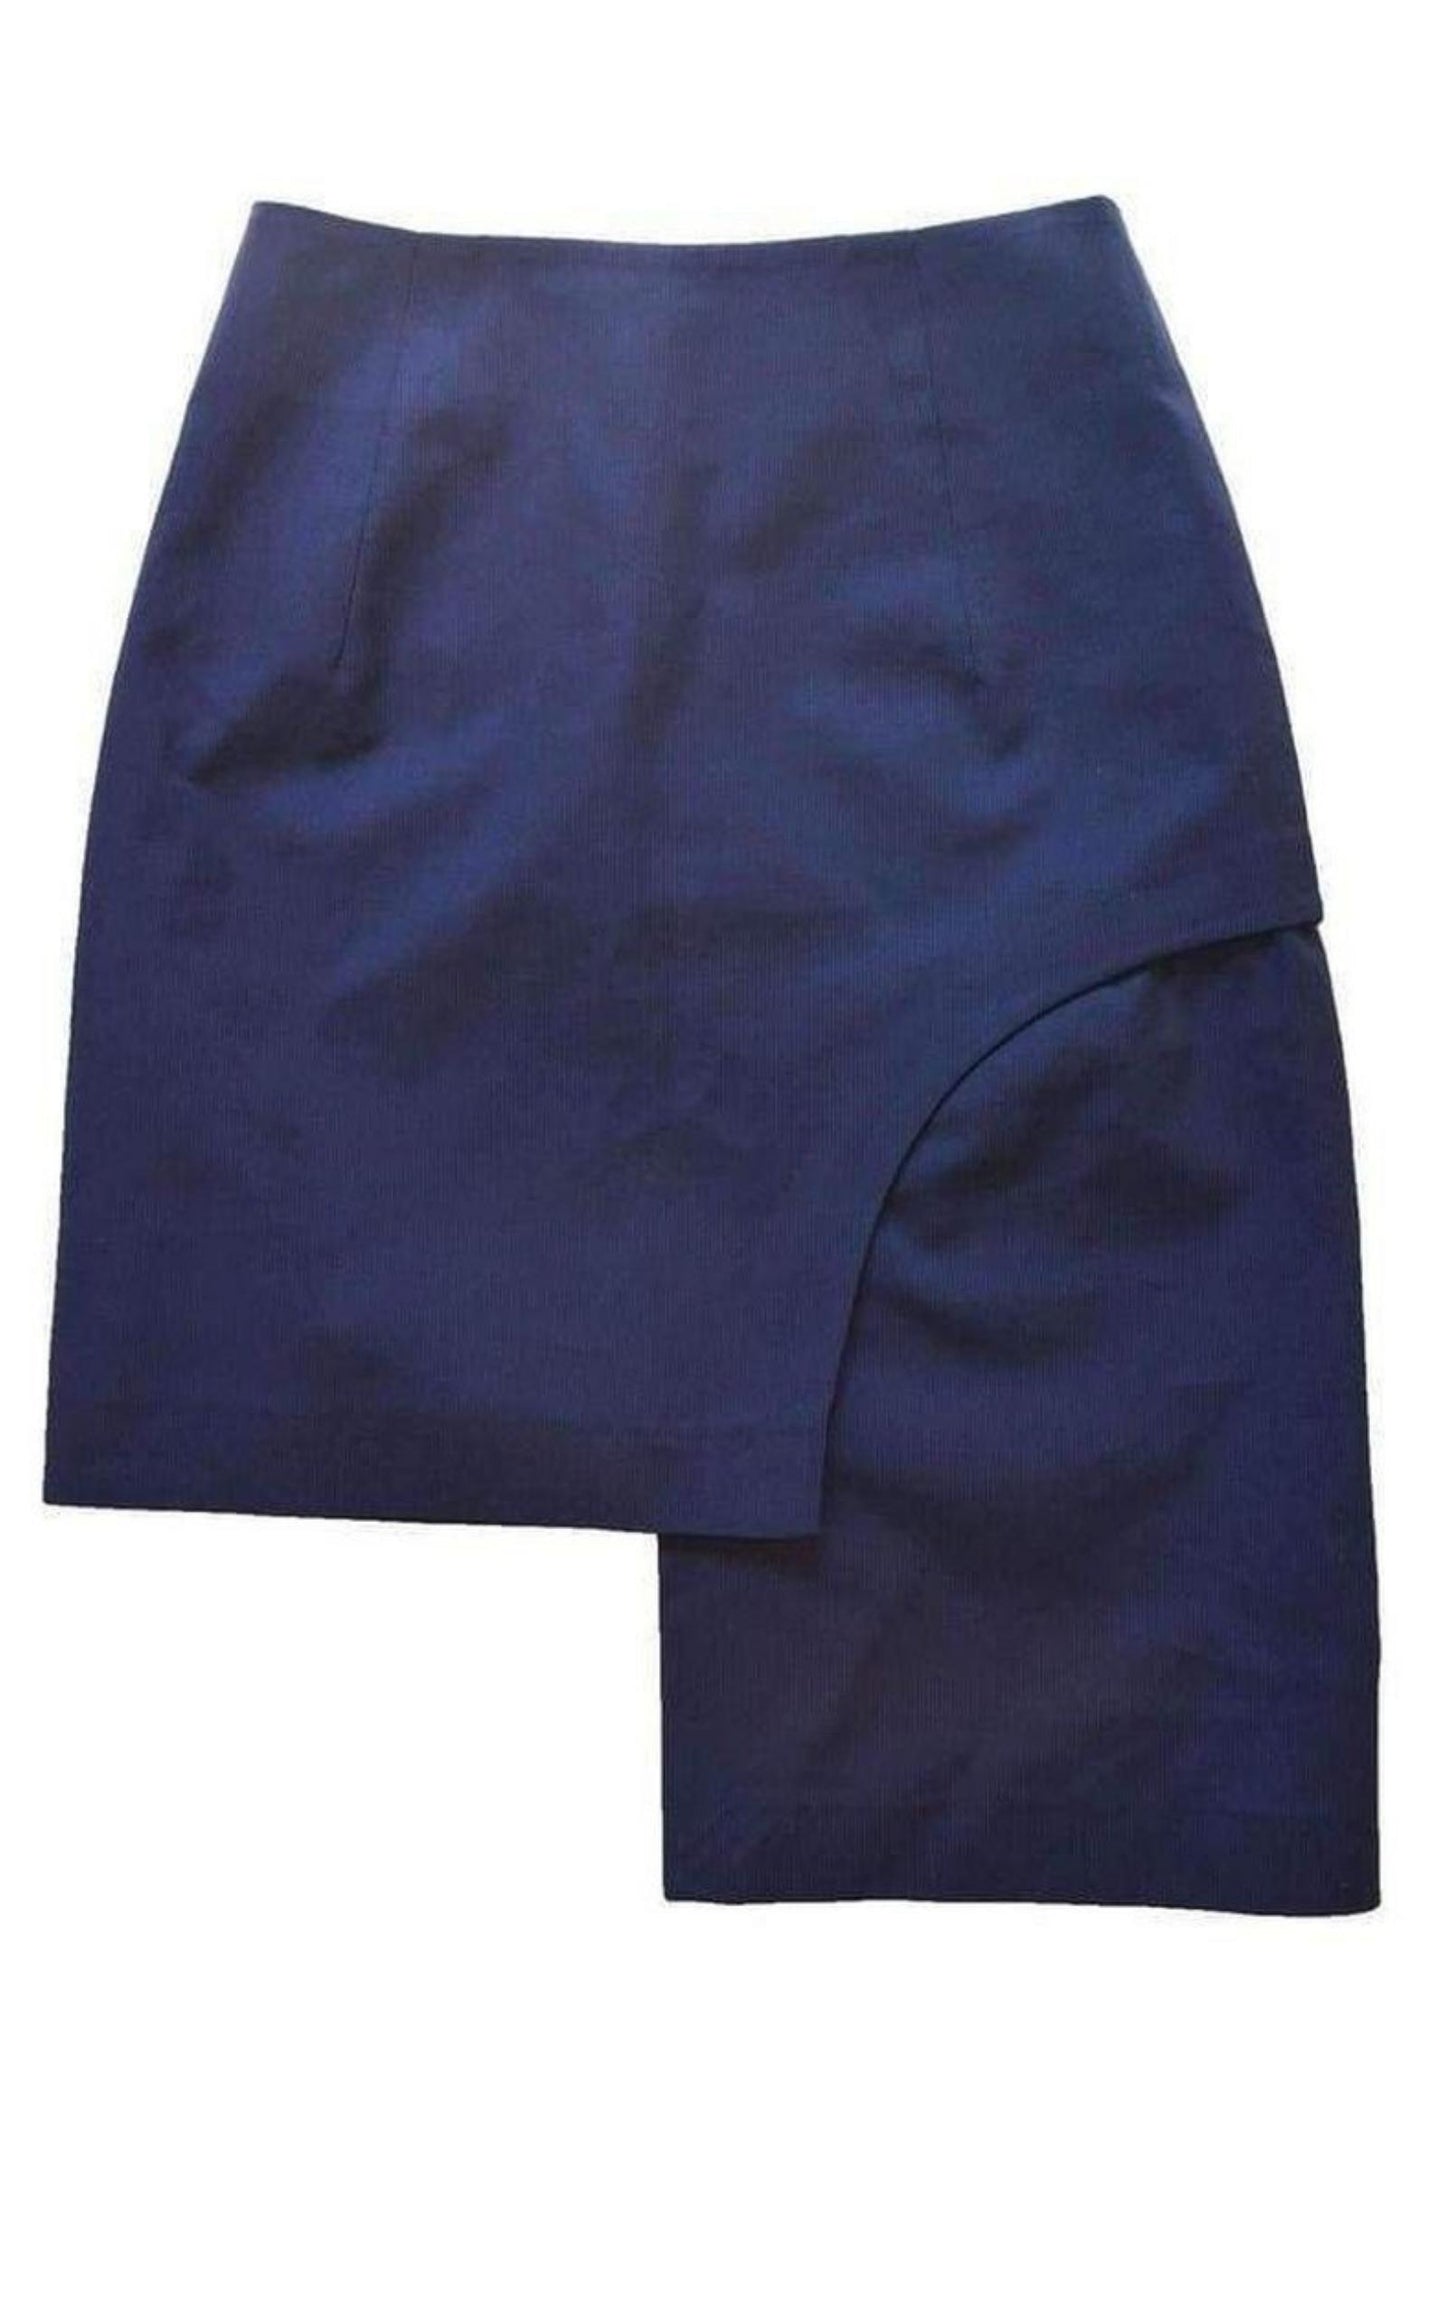  JacquemusSide Asymmetric Side Striped Skirt - Runway Catalog